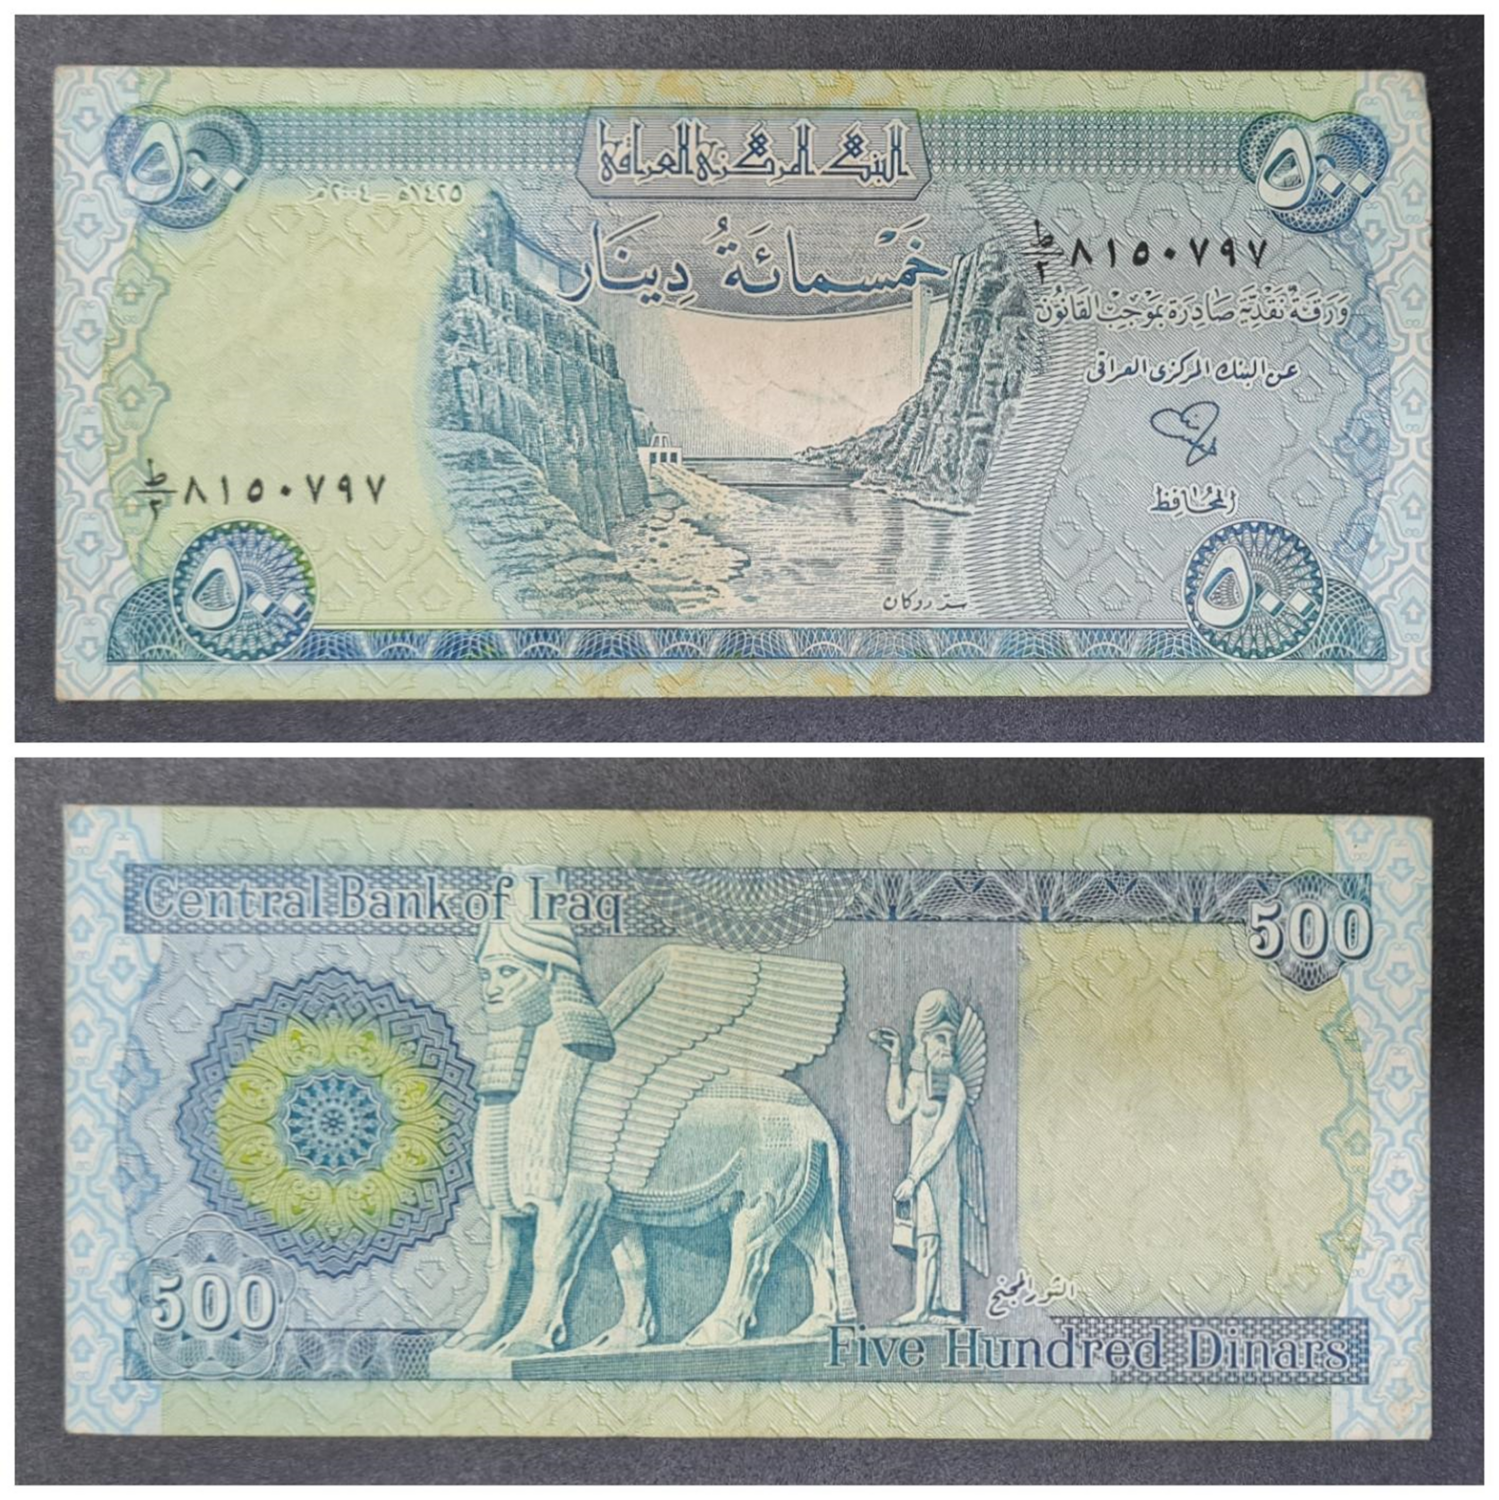 IRAQ 500 DINARS USED